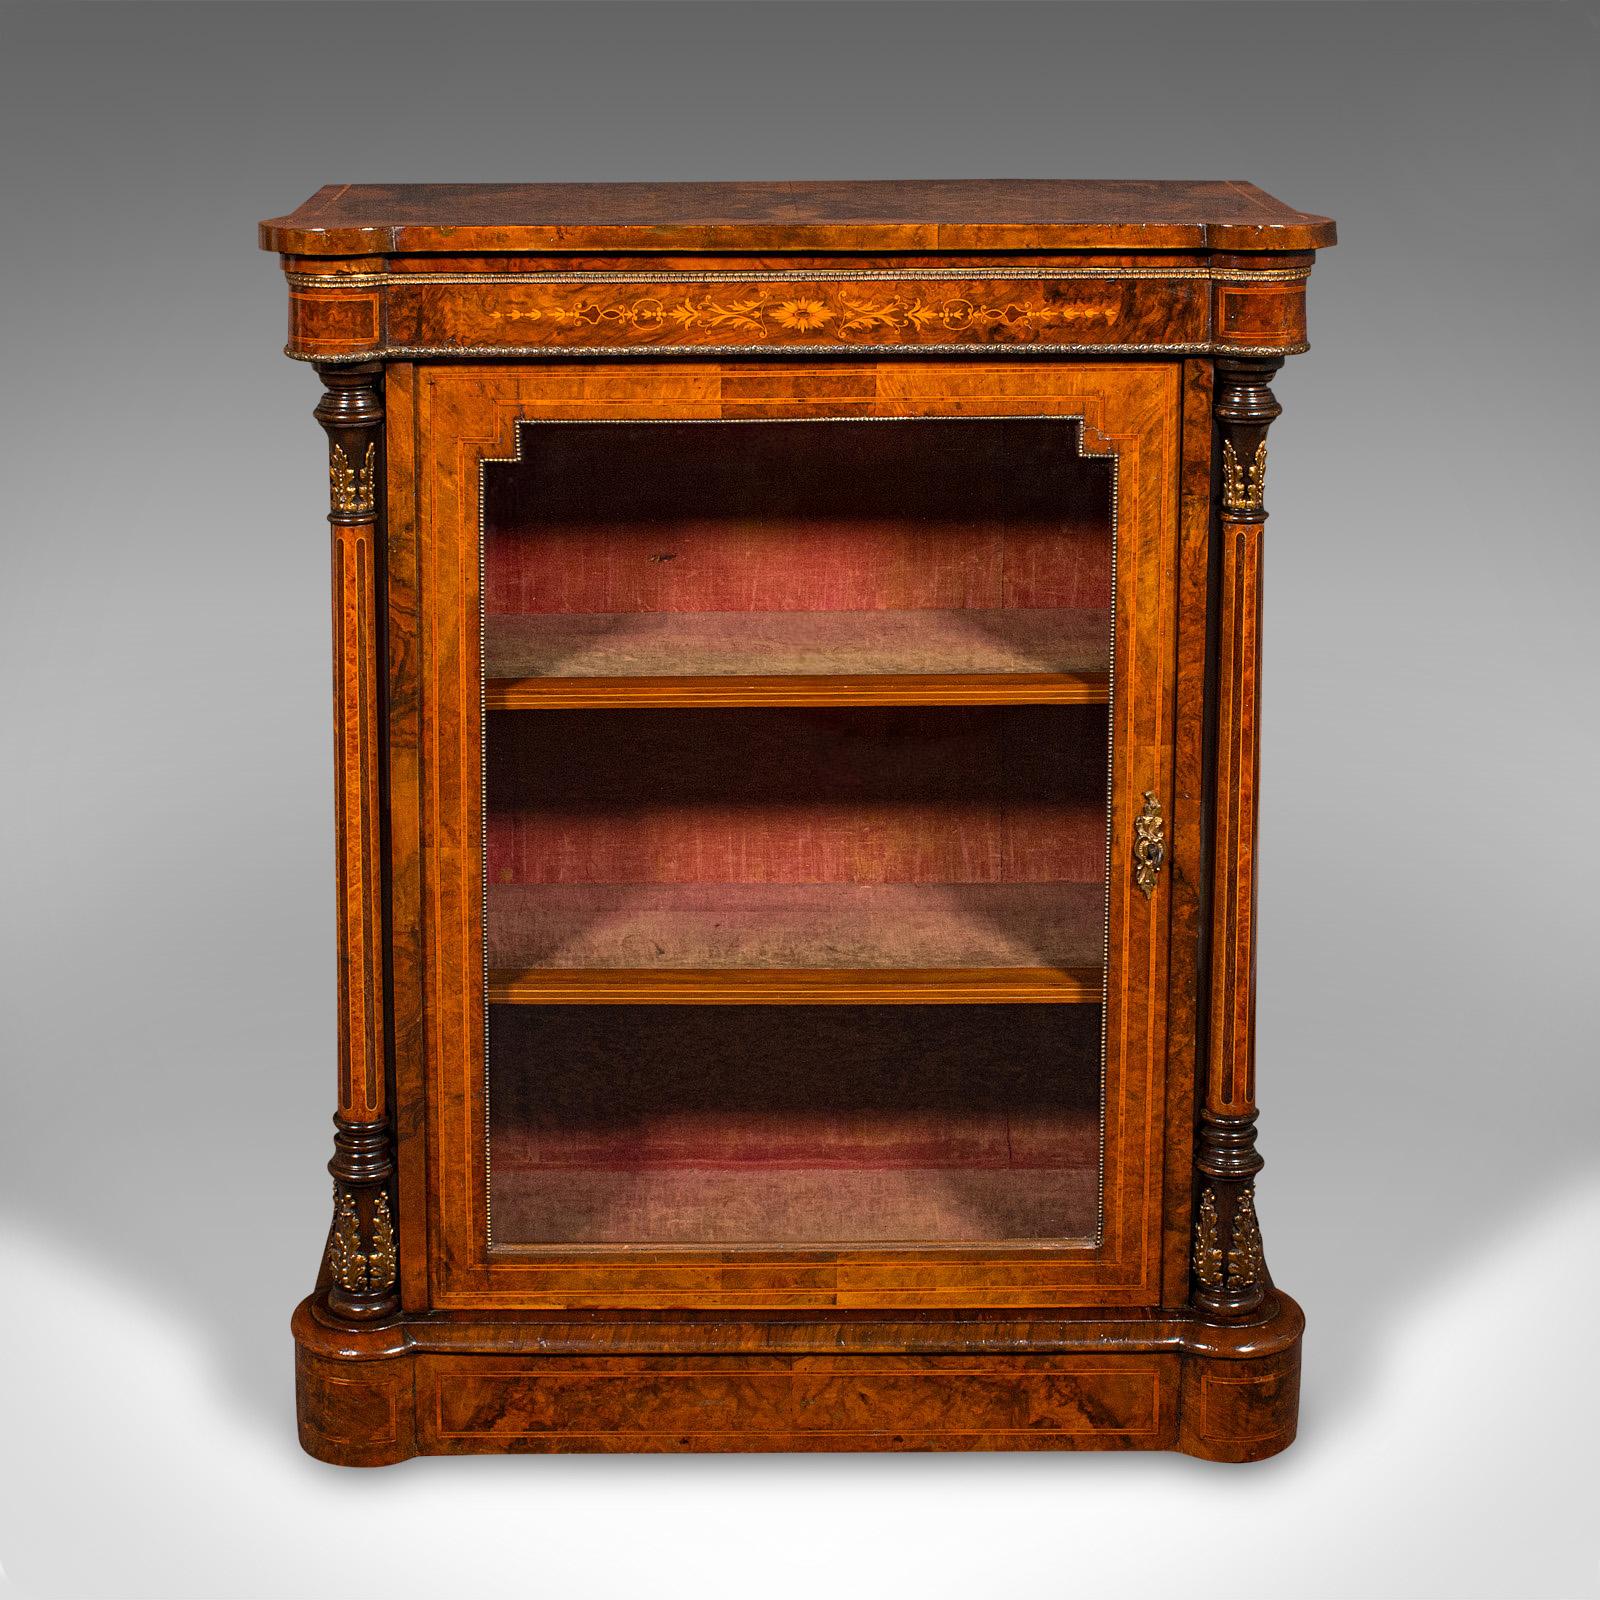 British Antique Pier Display Cabinet, English Walnut, Boxwood, Glazed Bookcase, Regency